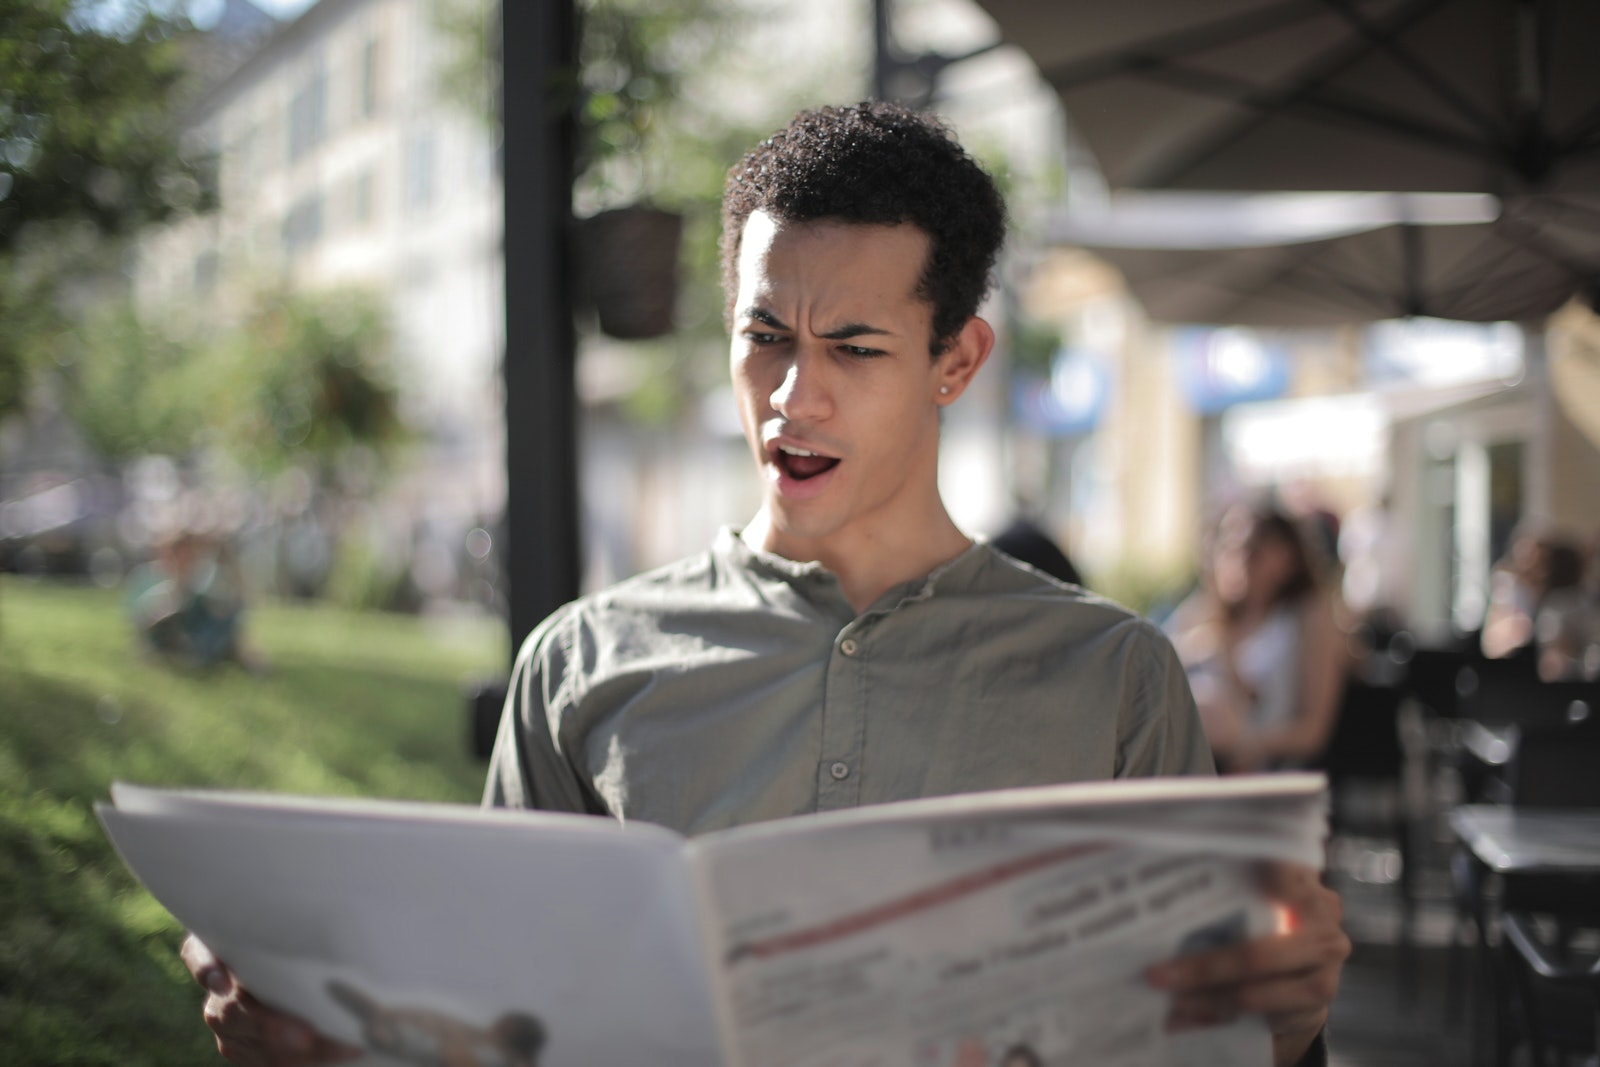 Shallow Focus Photo of Man Reading Newspaper